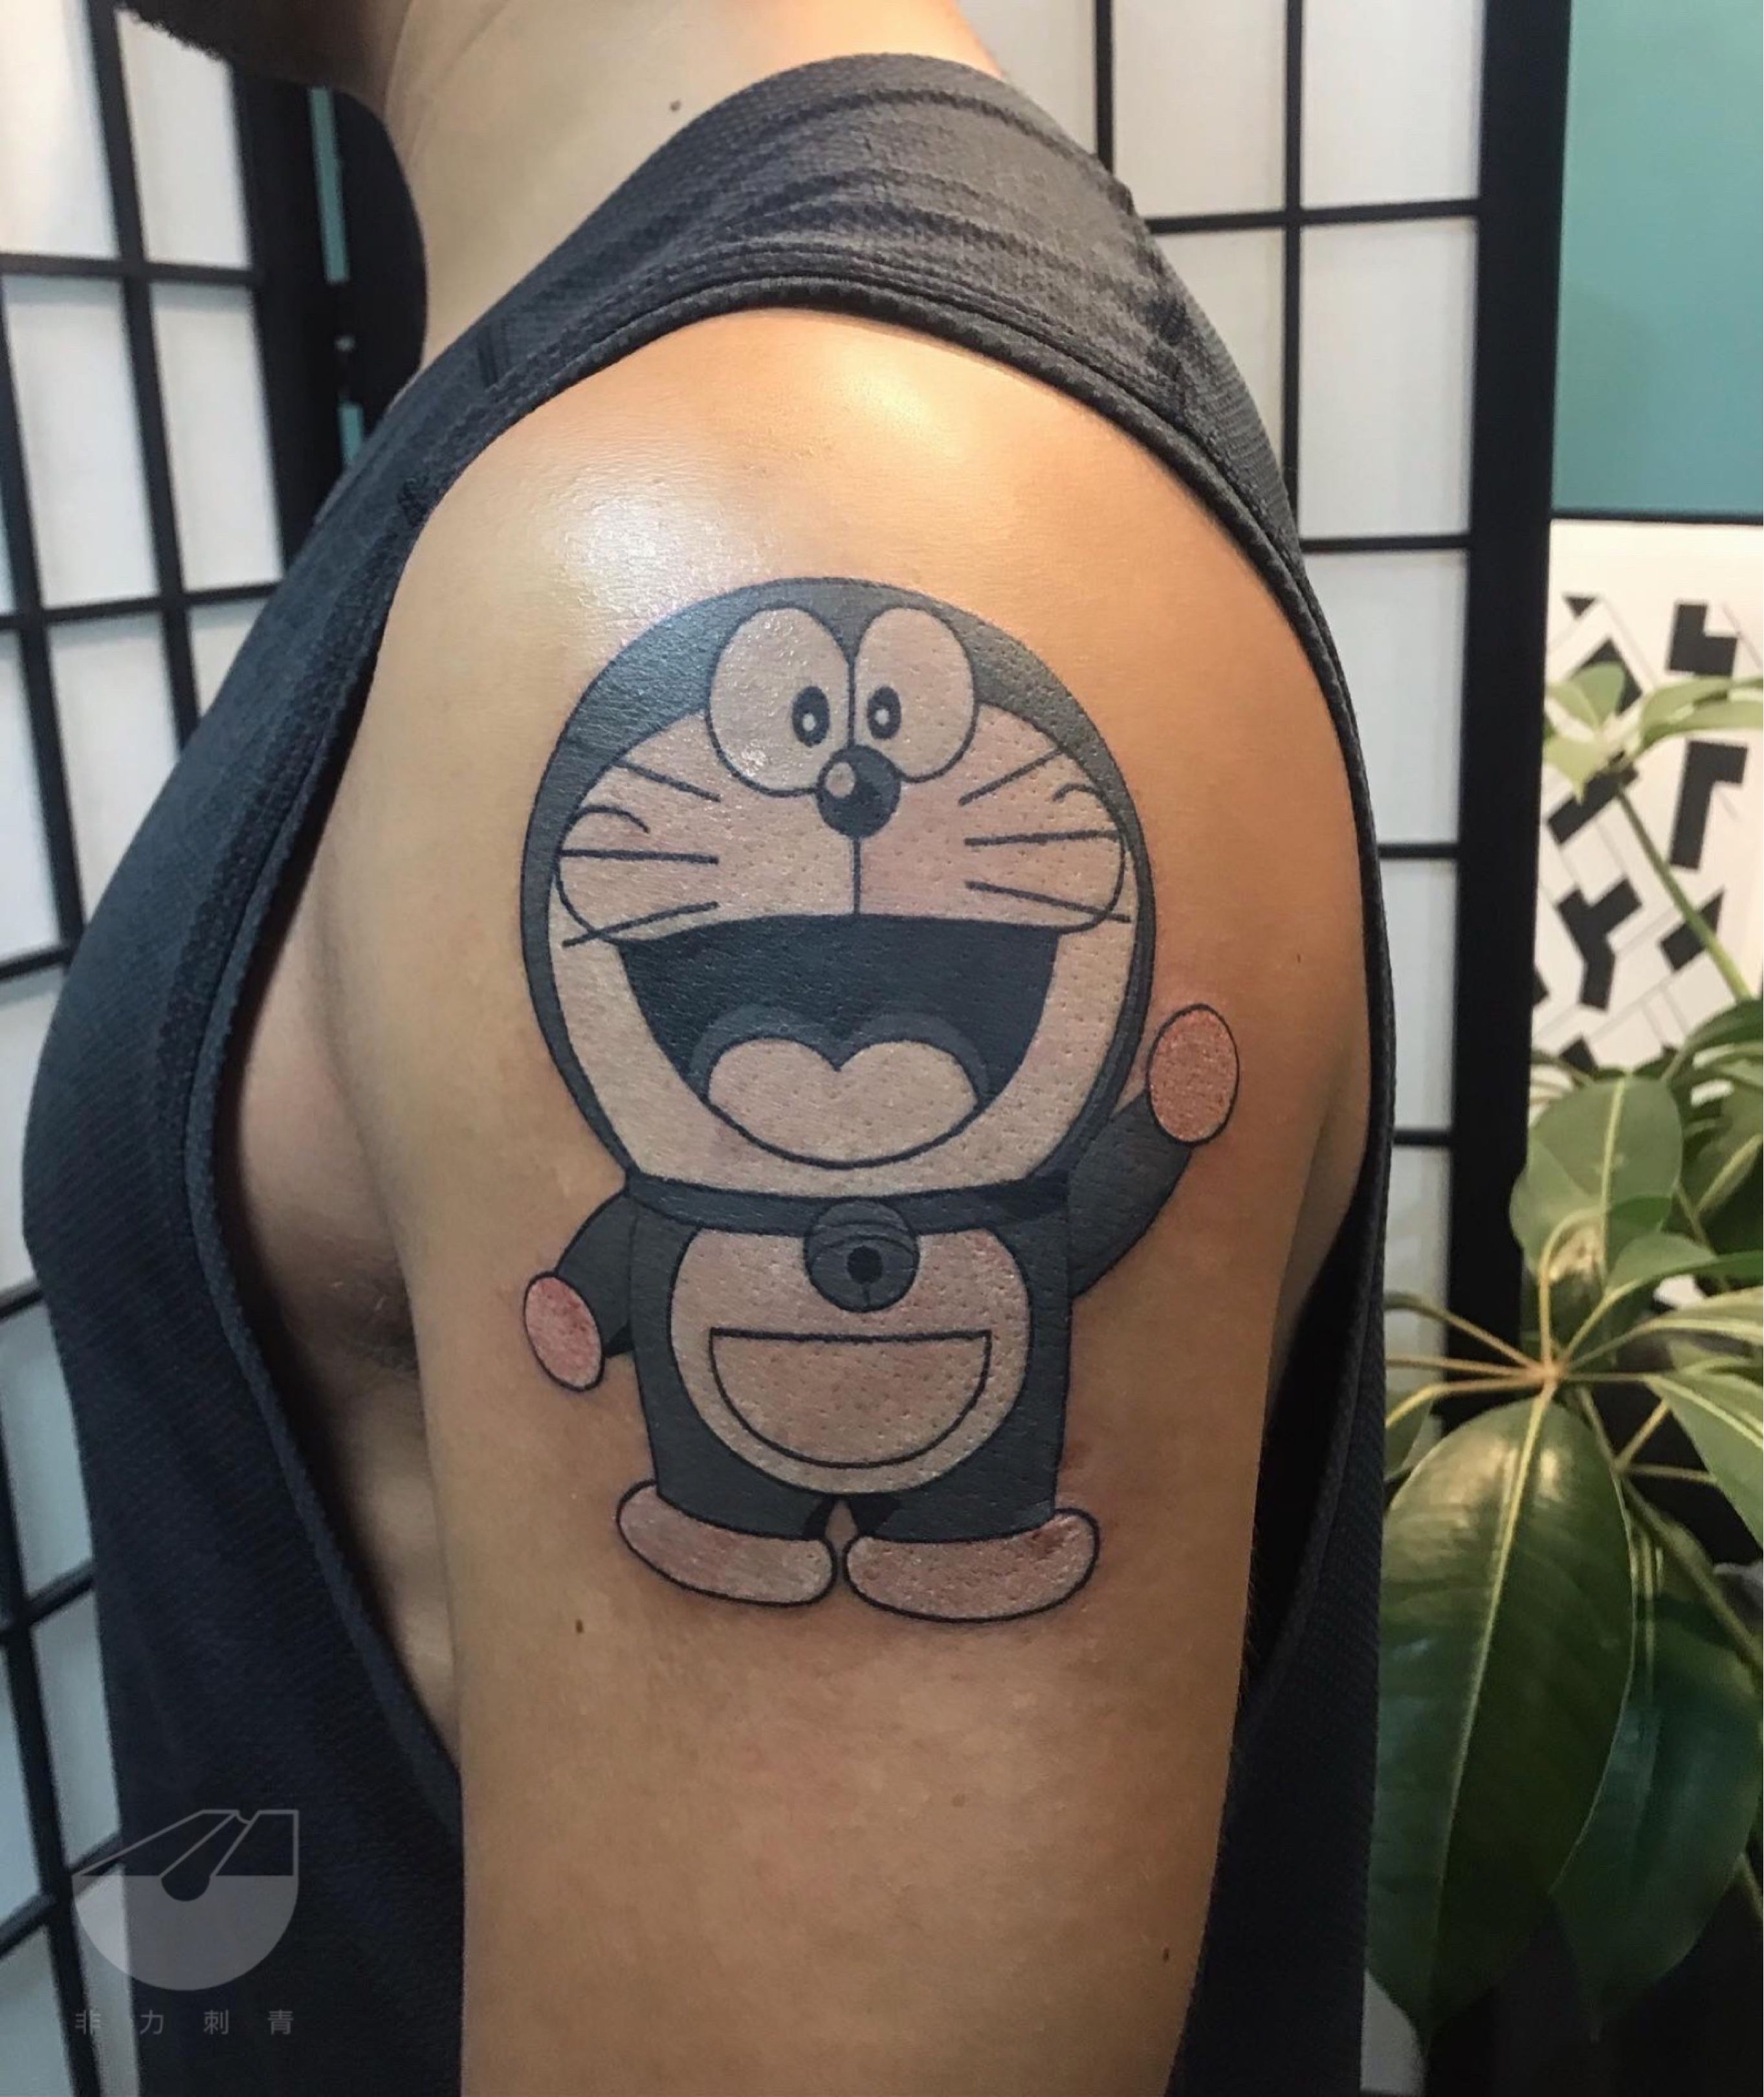 Tattoo uploaded by Xavier • Doraemon tattoo by fb583069054 on Instagram. # doraemon #neko #cat #anime • Tattoodo